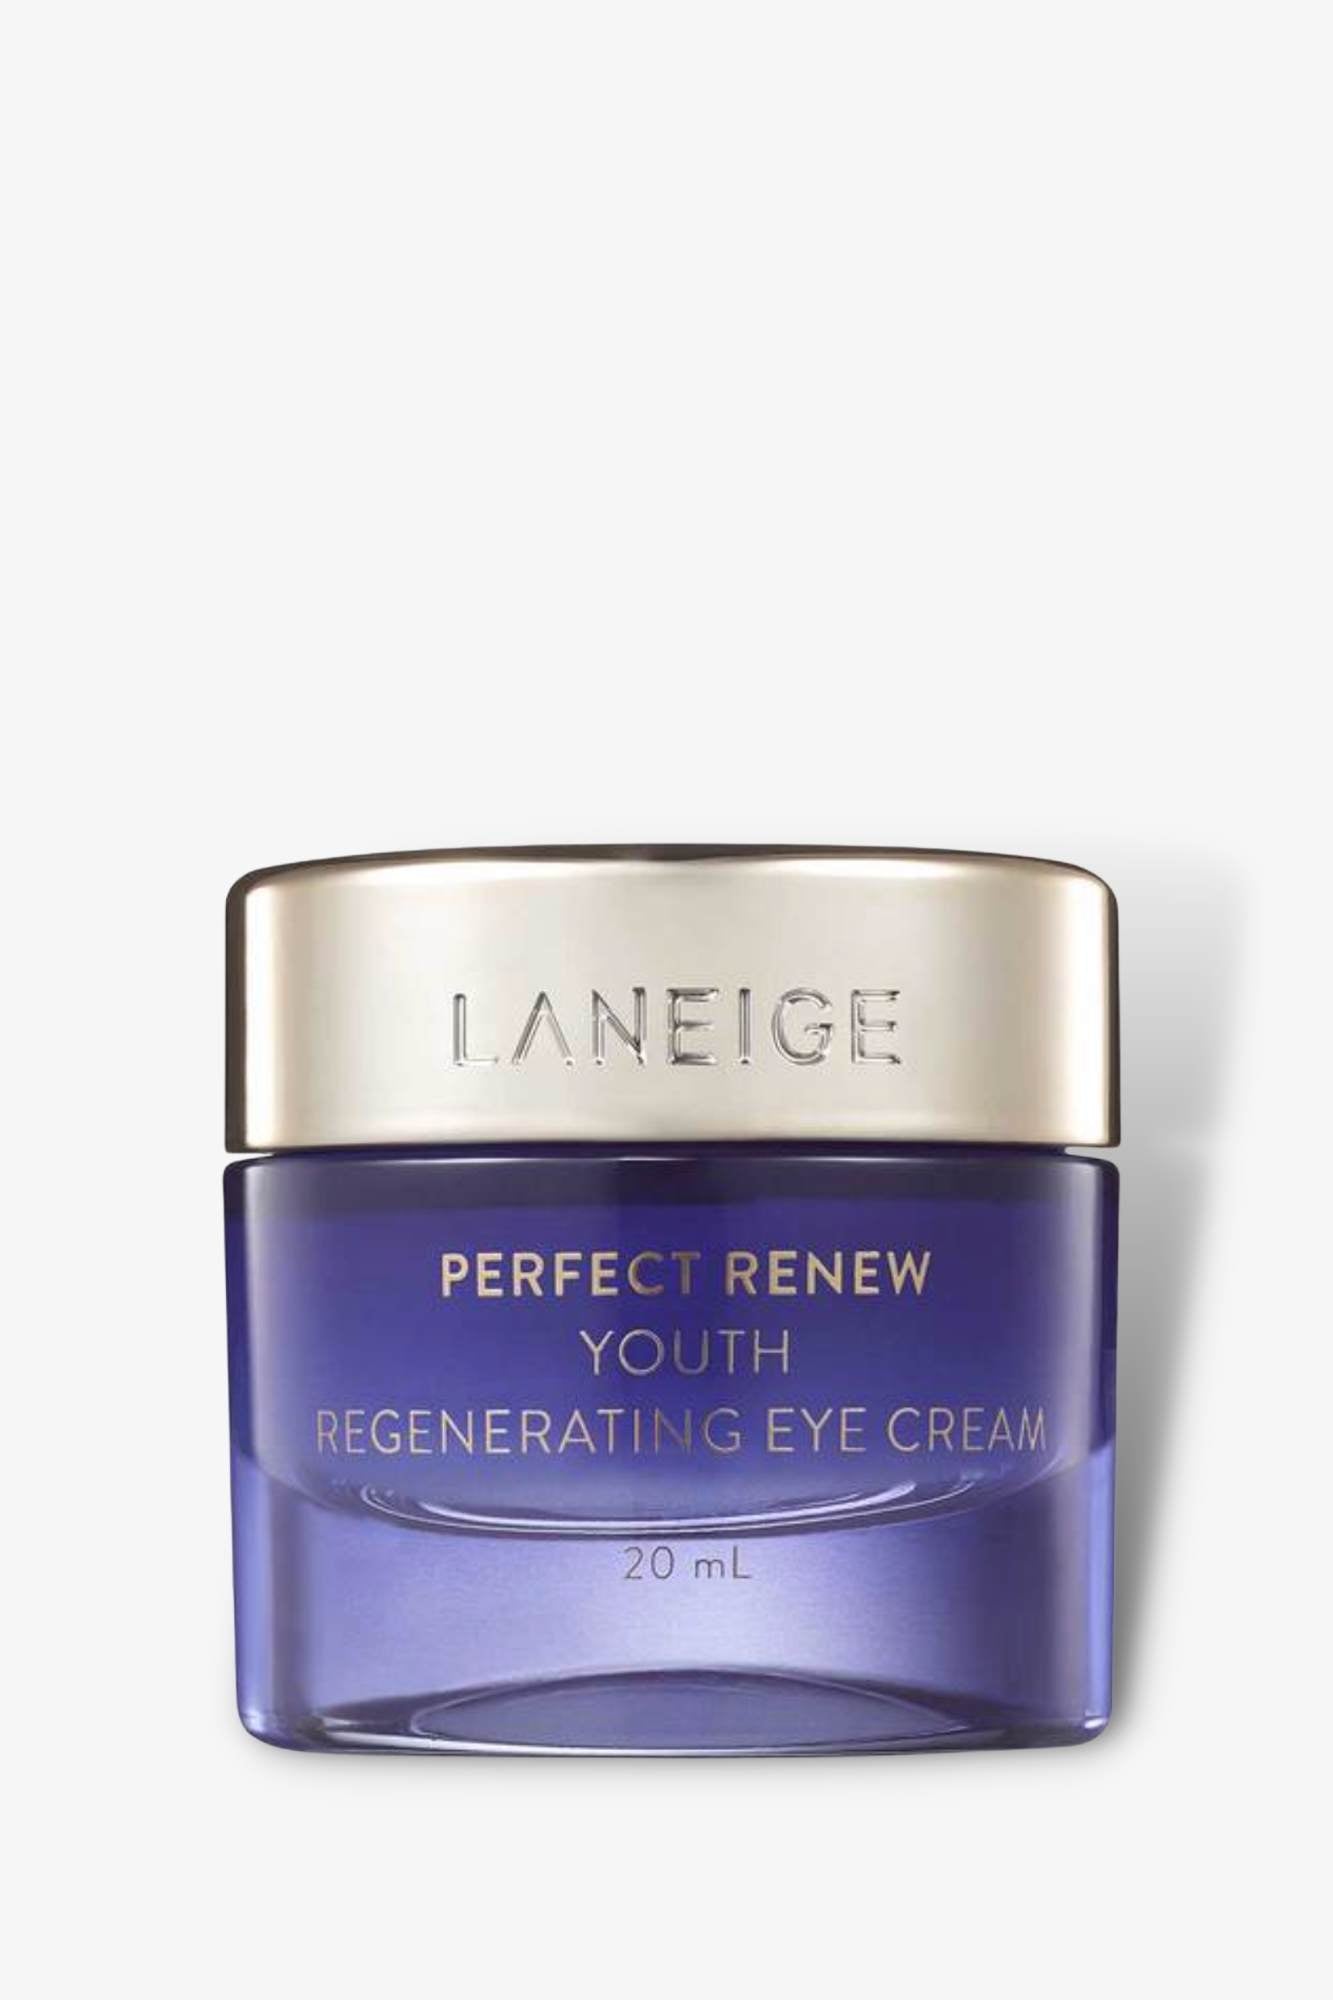 LANEIGE - Perfect Renew Youth Generating Eye Cream - 20ml